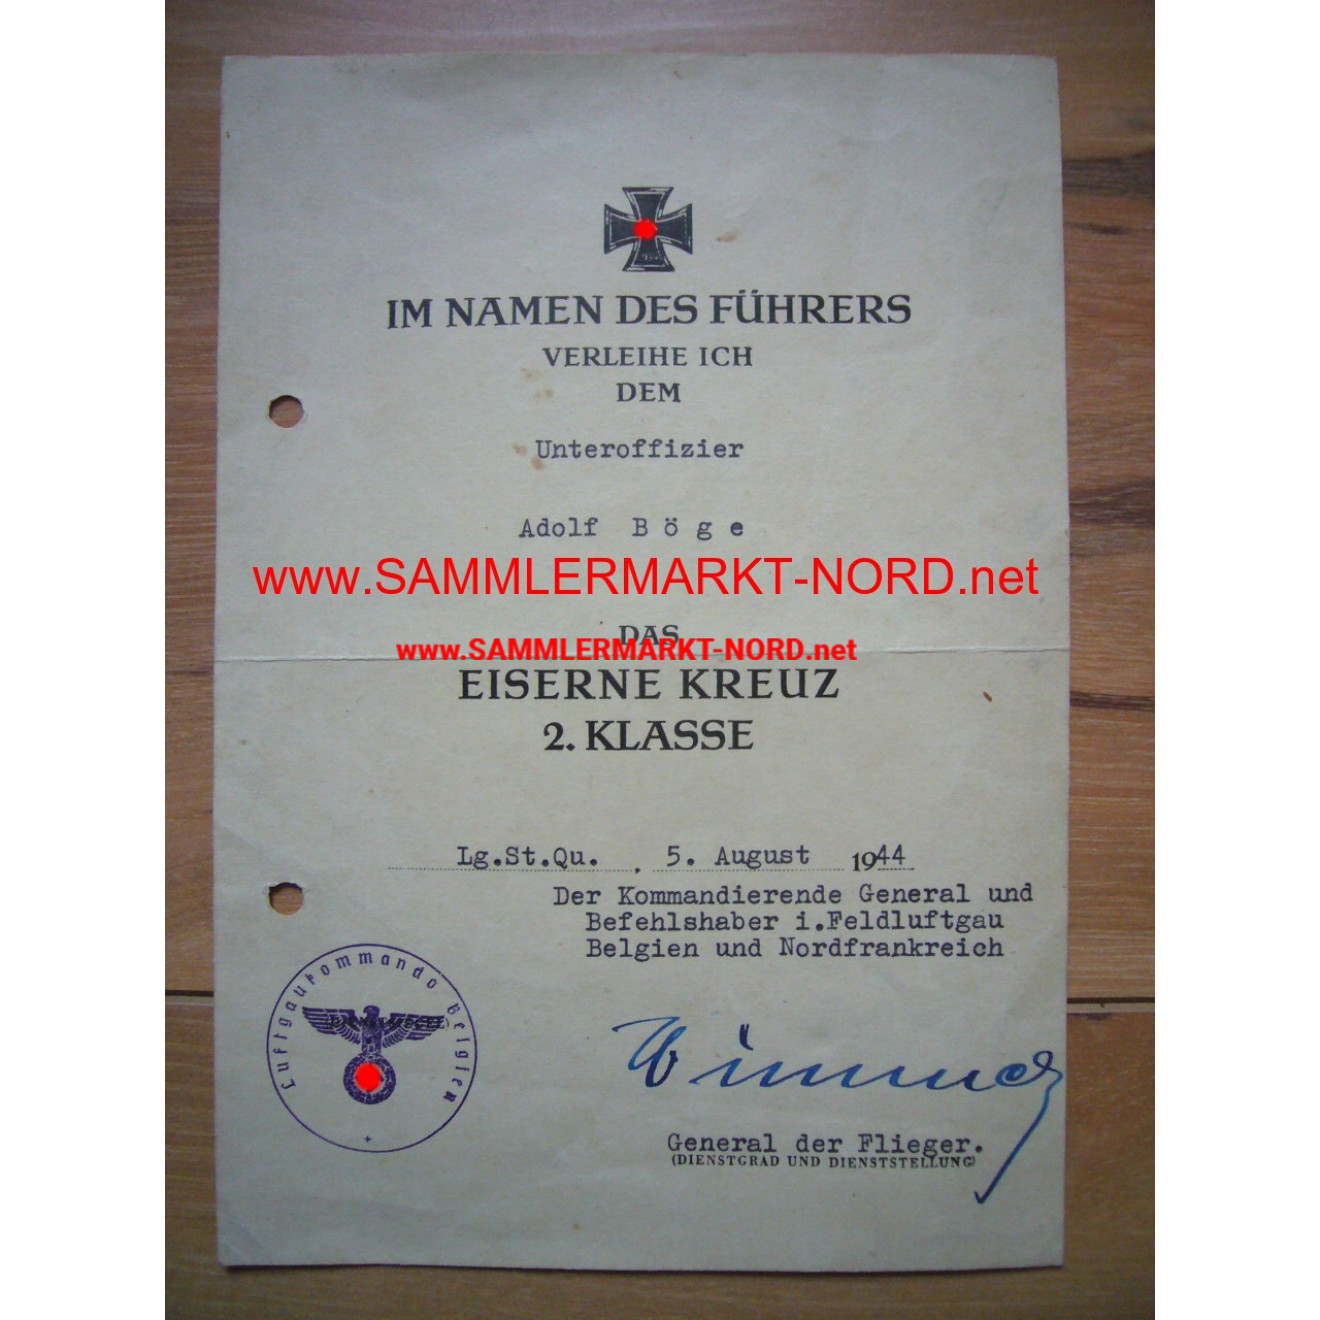 Award certificate for the Iron Cross 2nd class - Luftgaukommando